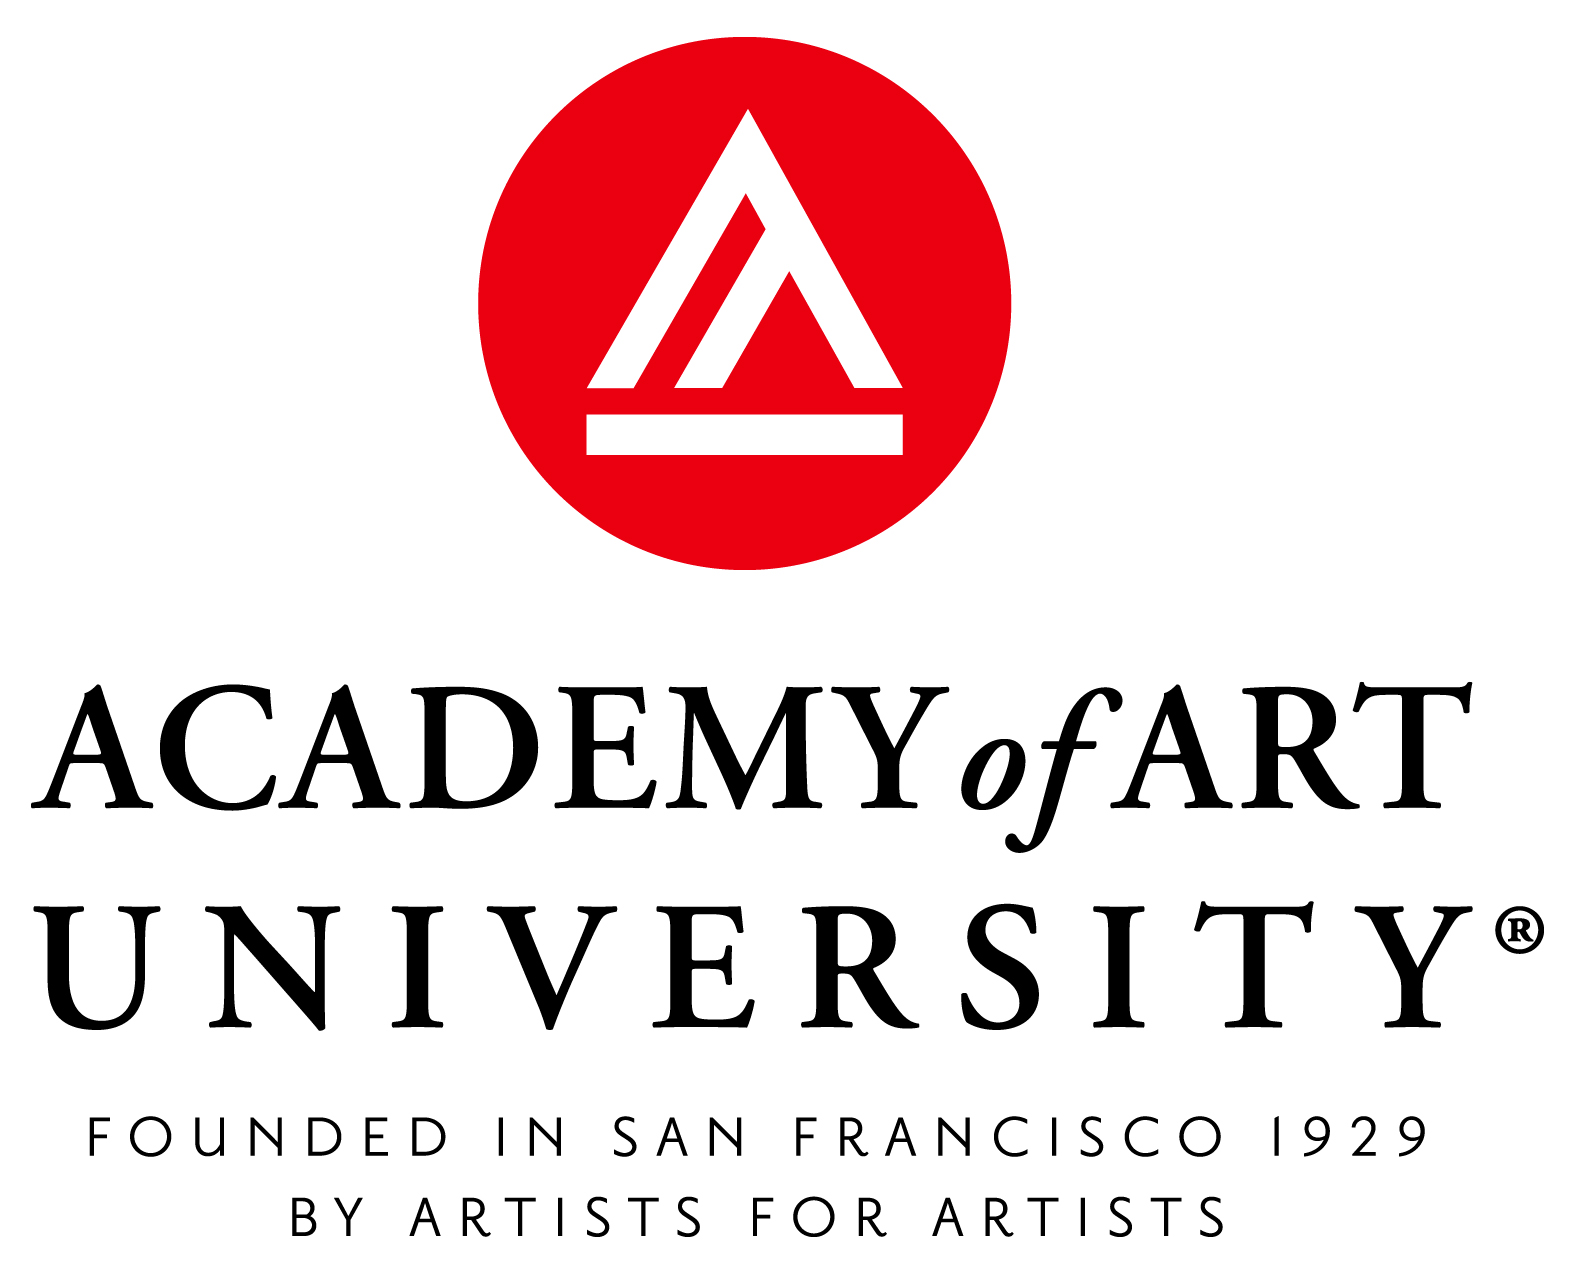 academy of art university